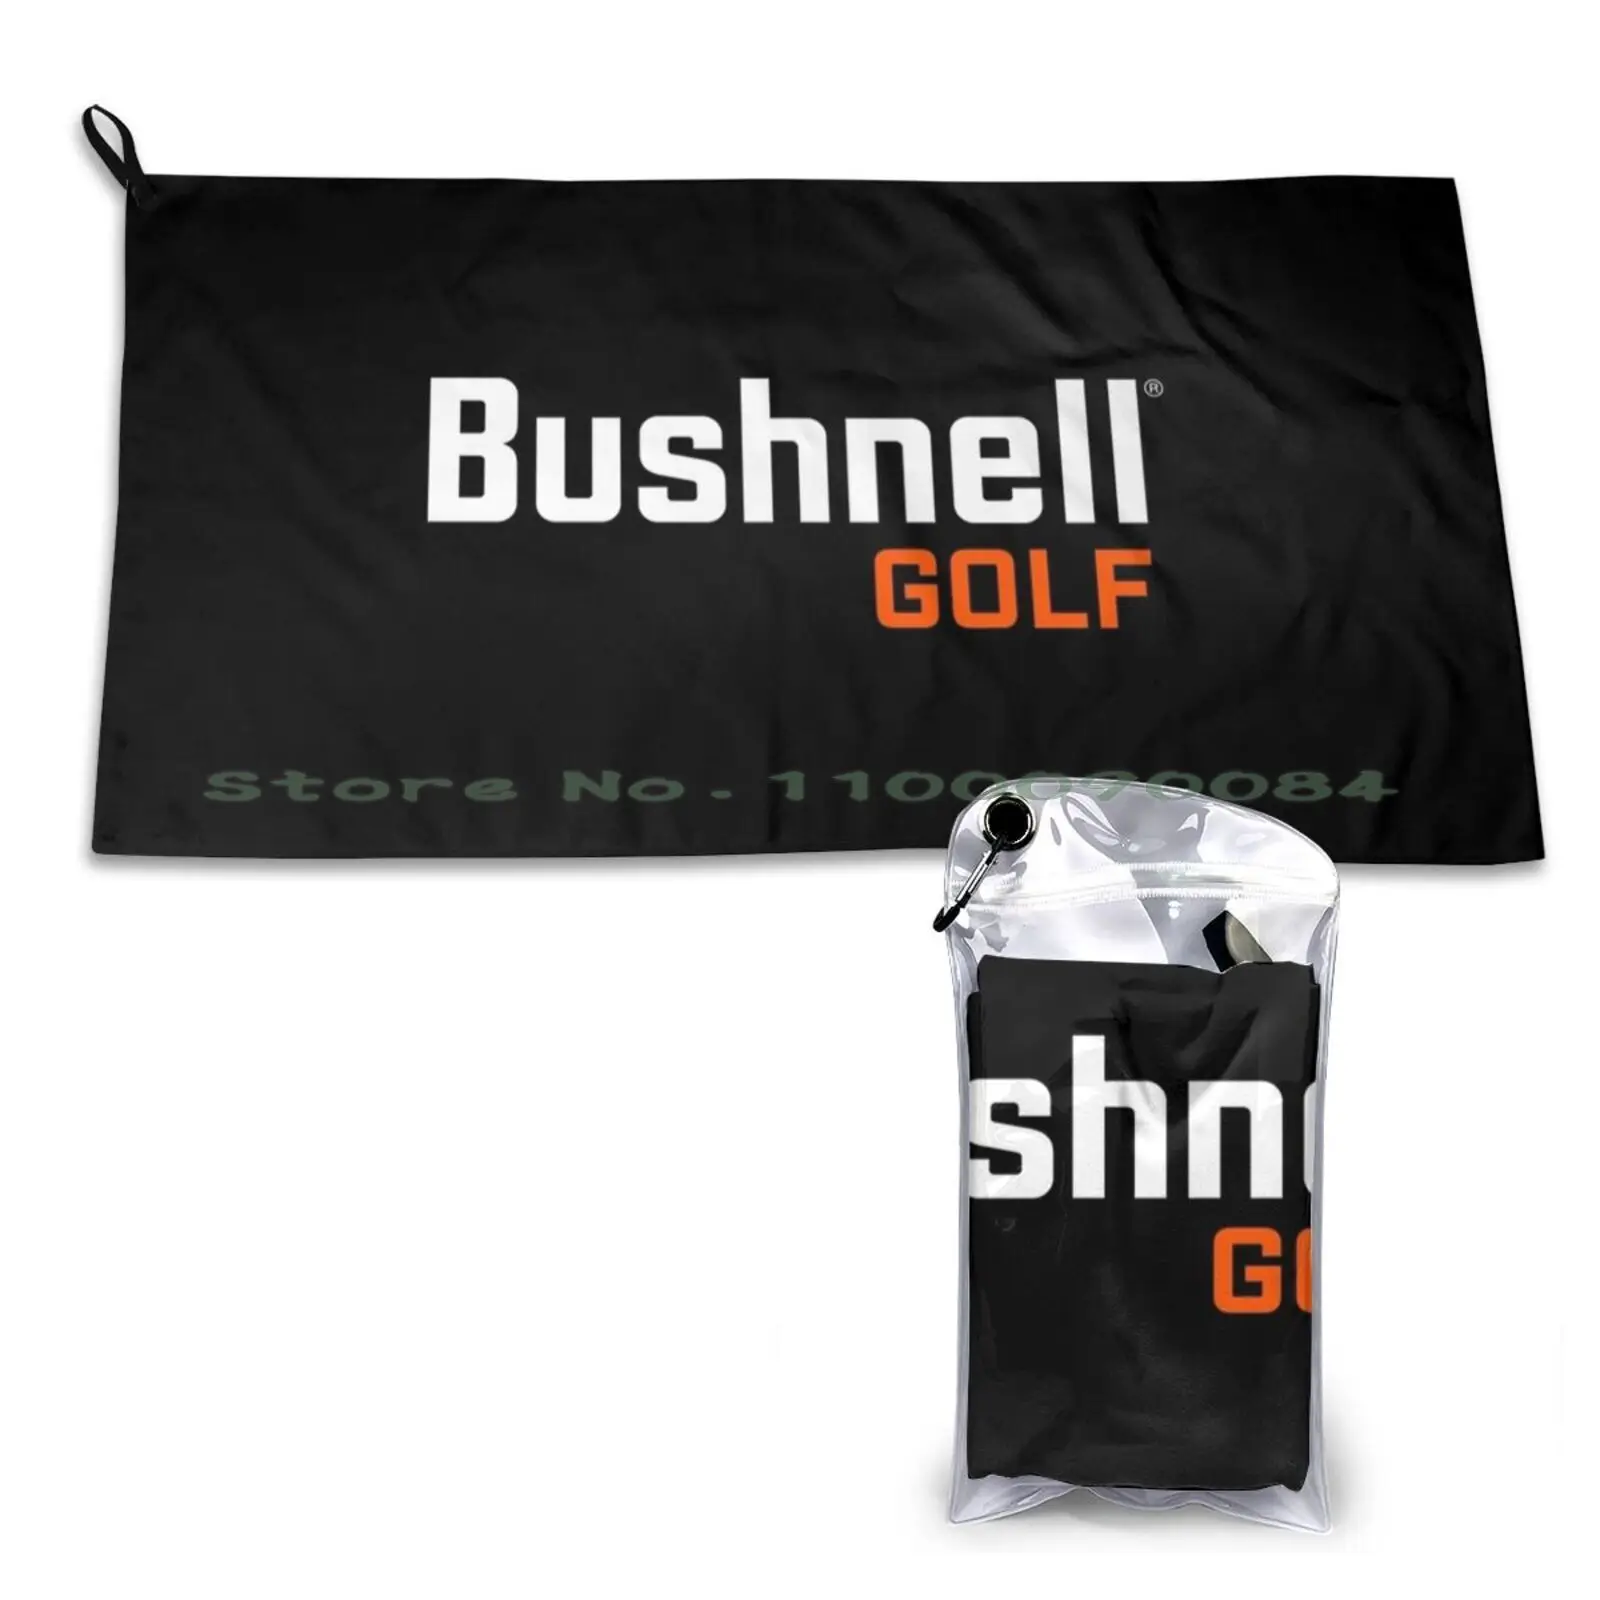 

Golf Equipment-Bushnell Quick Dry Towel Gym Sports Bath Portable Bay94 Bay 94 Nostromo Sulaco Scifi Sci Fi Science Fiction Top